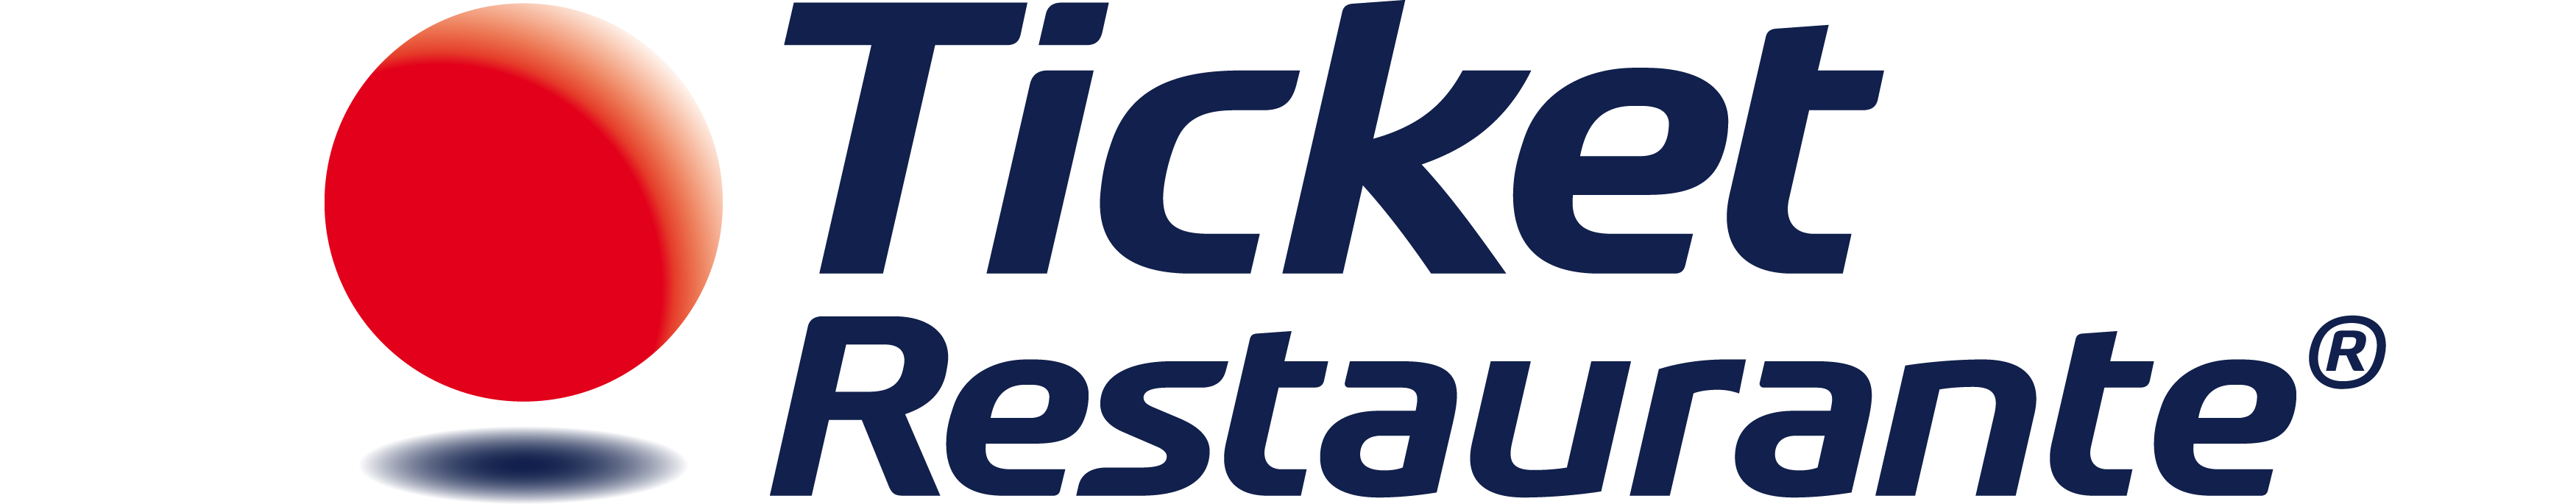 ticket logo, ticket restaurante logo.